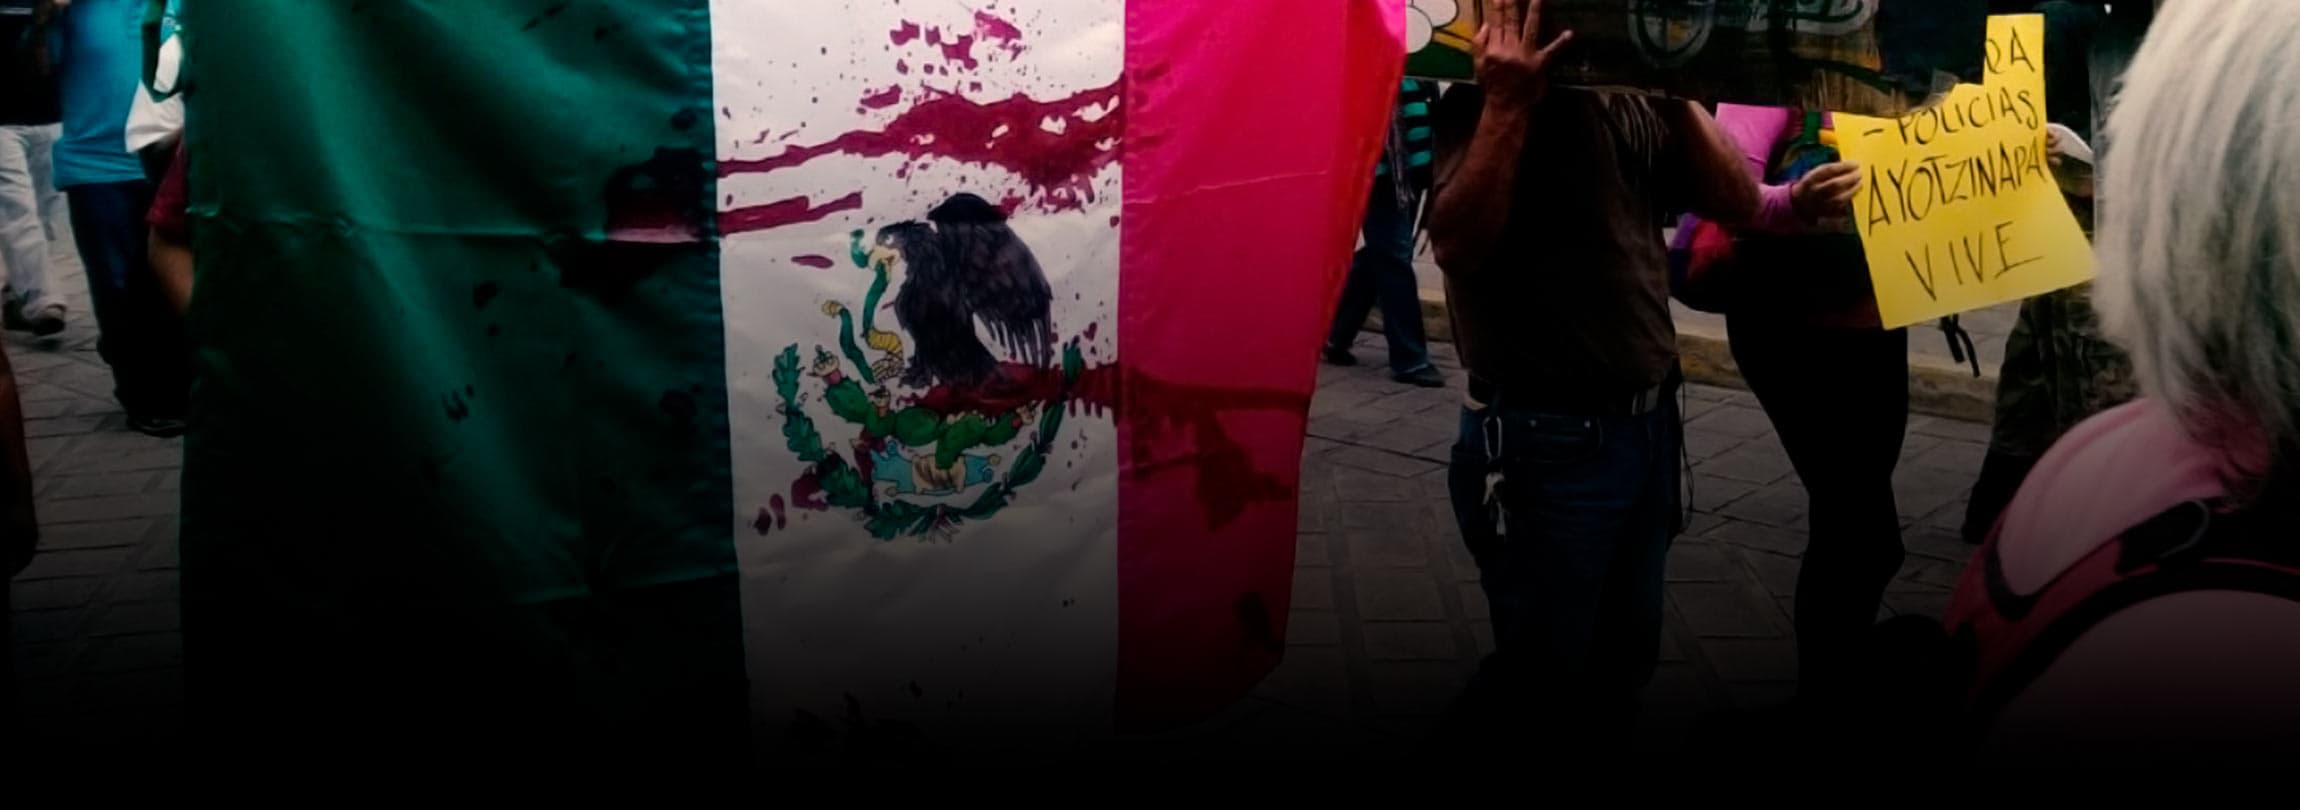 Bispos e sacerdotes realizam “exorcismo magno” no México